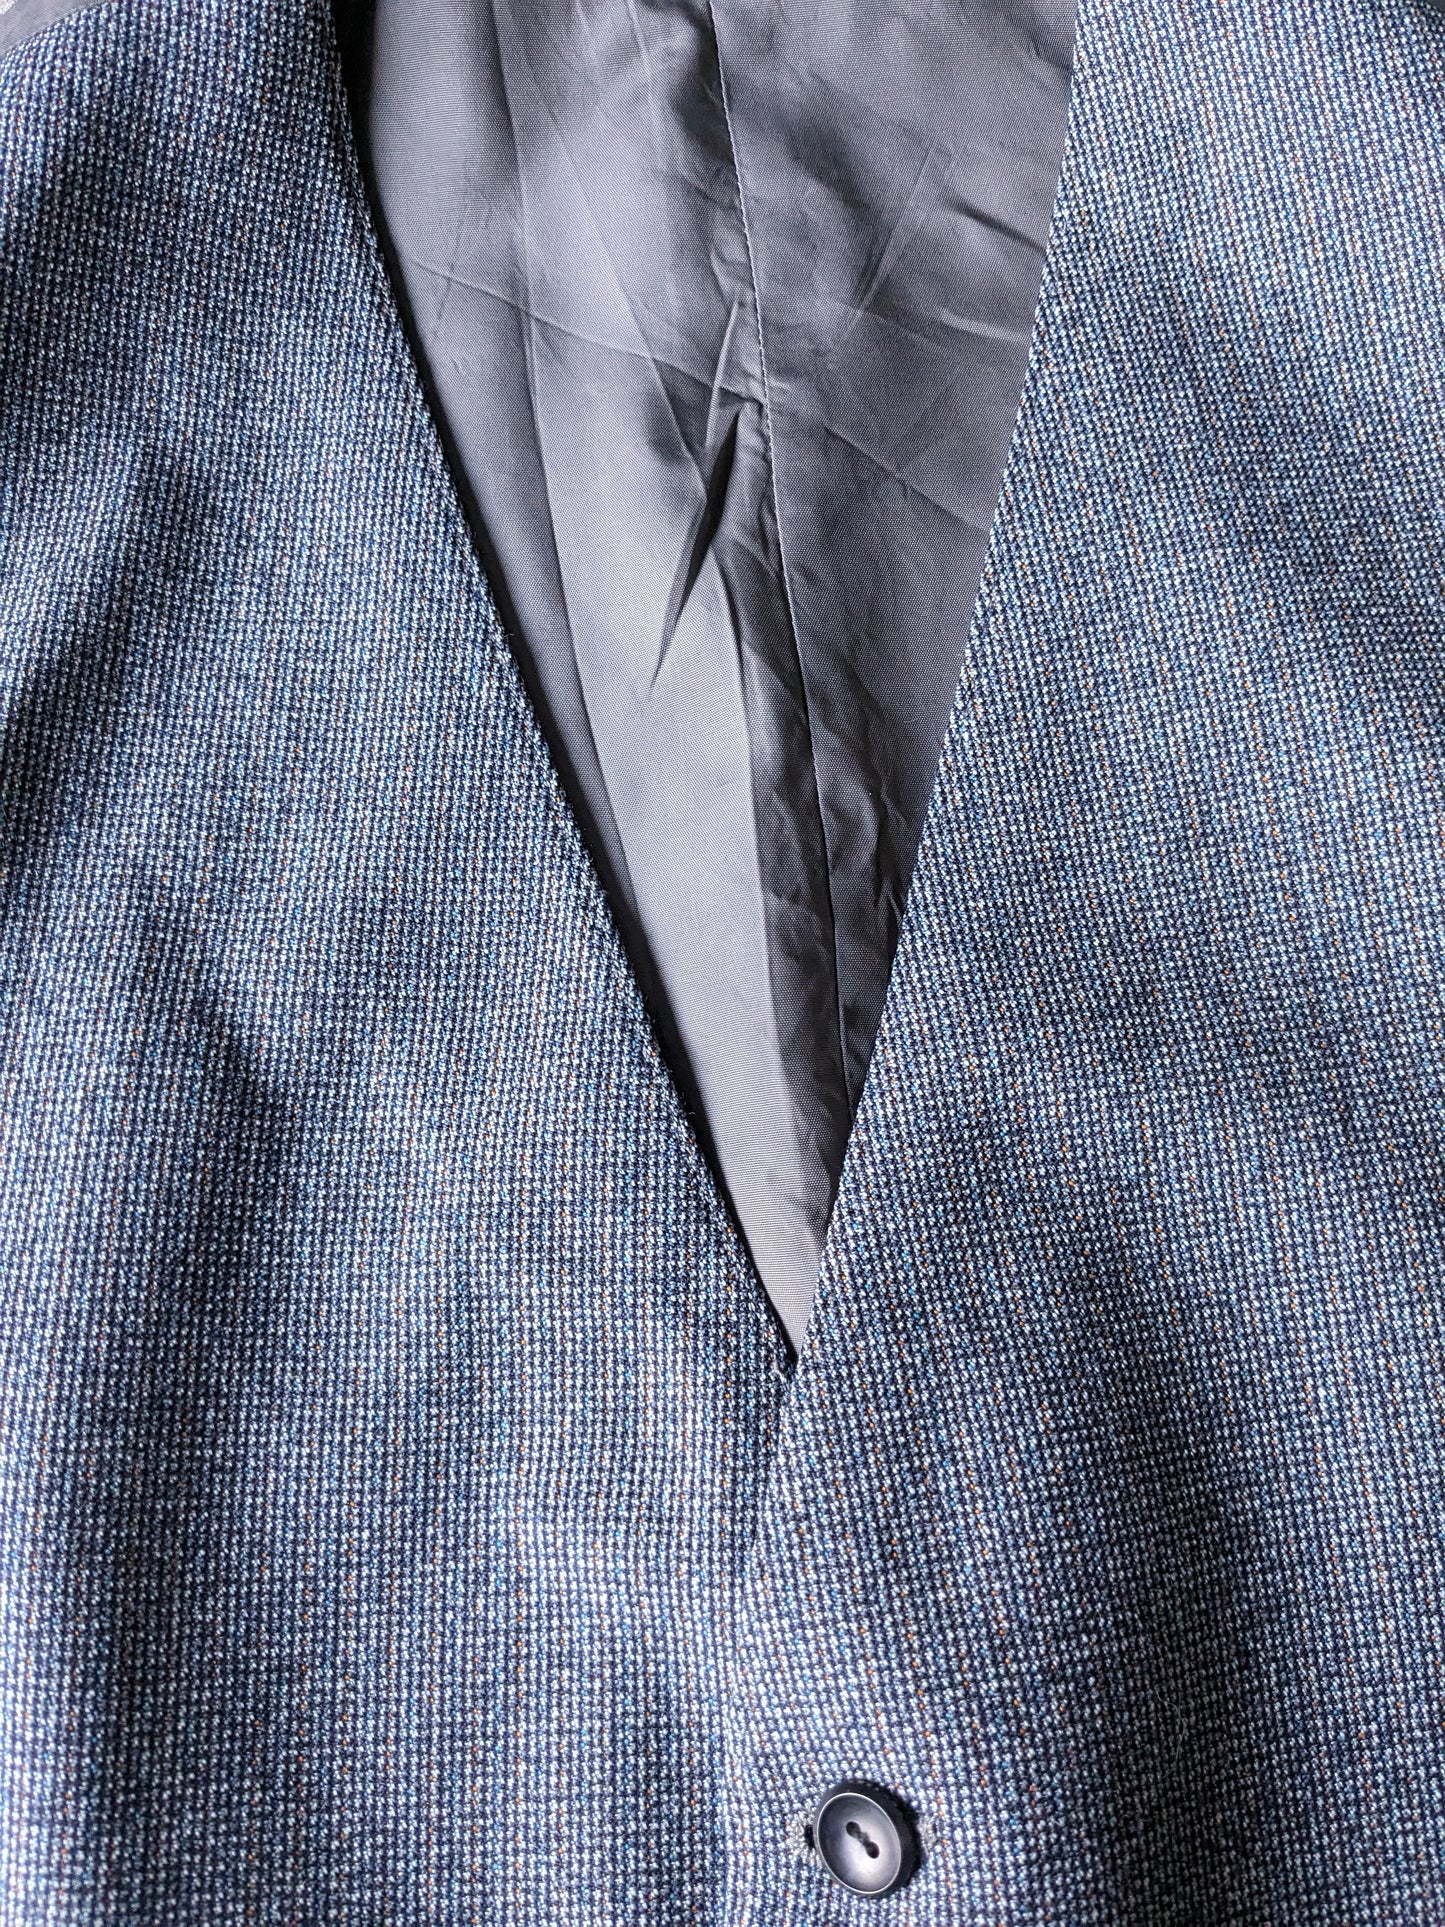 Waistcoat. Blue brown gray mixed. Size S. #338.